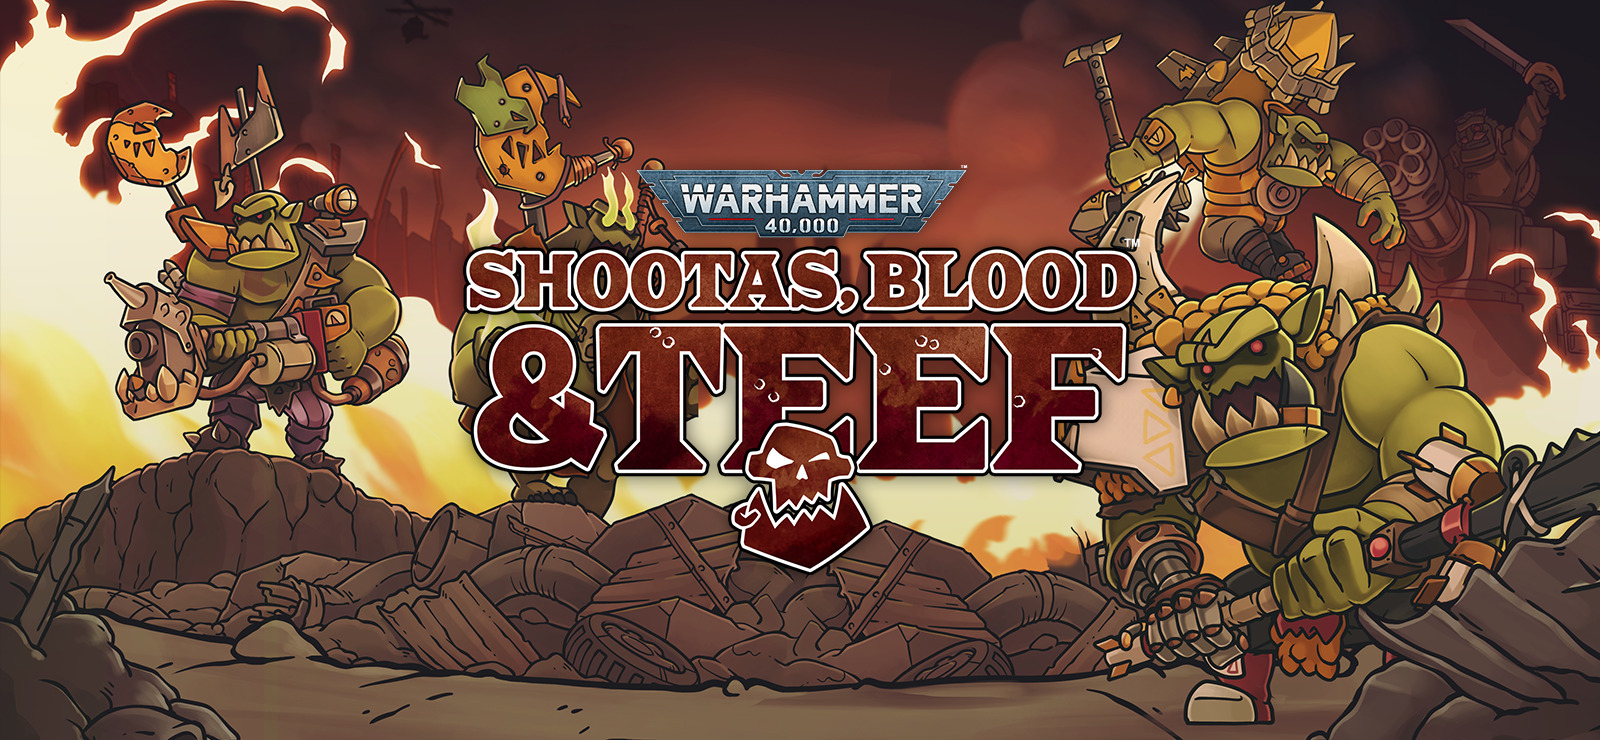 Warhammer 40.000: Shootas, Blood & Teef è disponibile da ora su Switch e PC